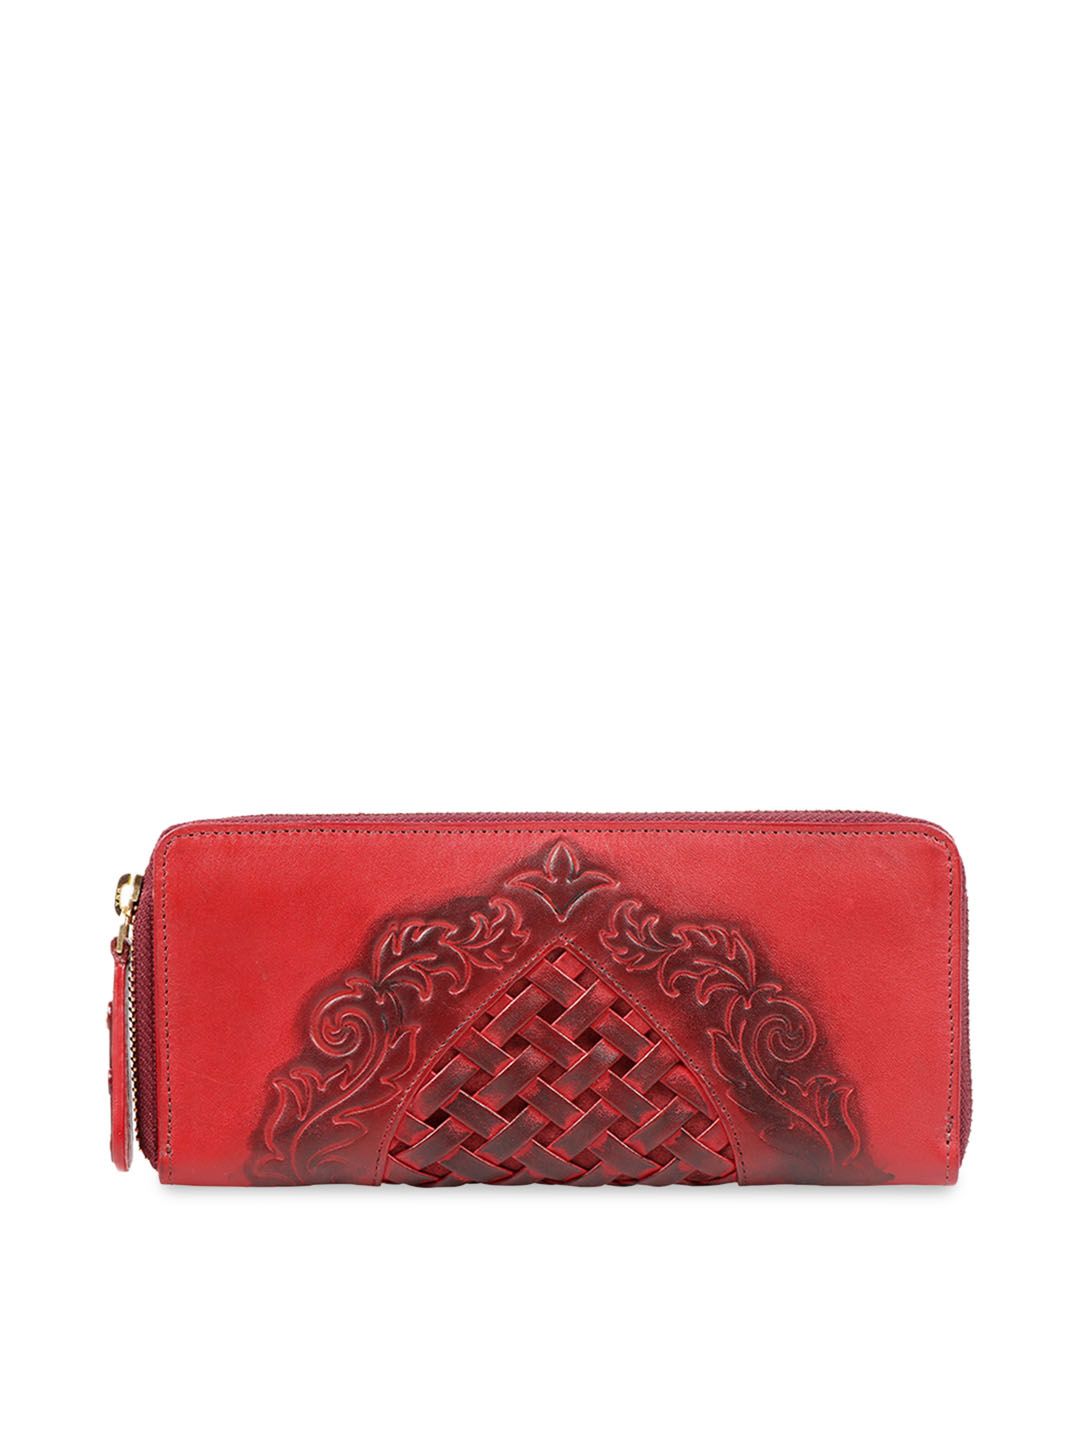 Hidesign Women Red Self Design Leather Zip Around Wallet Price in India